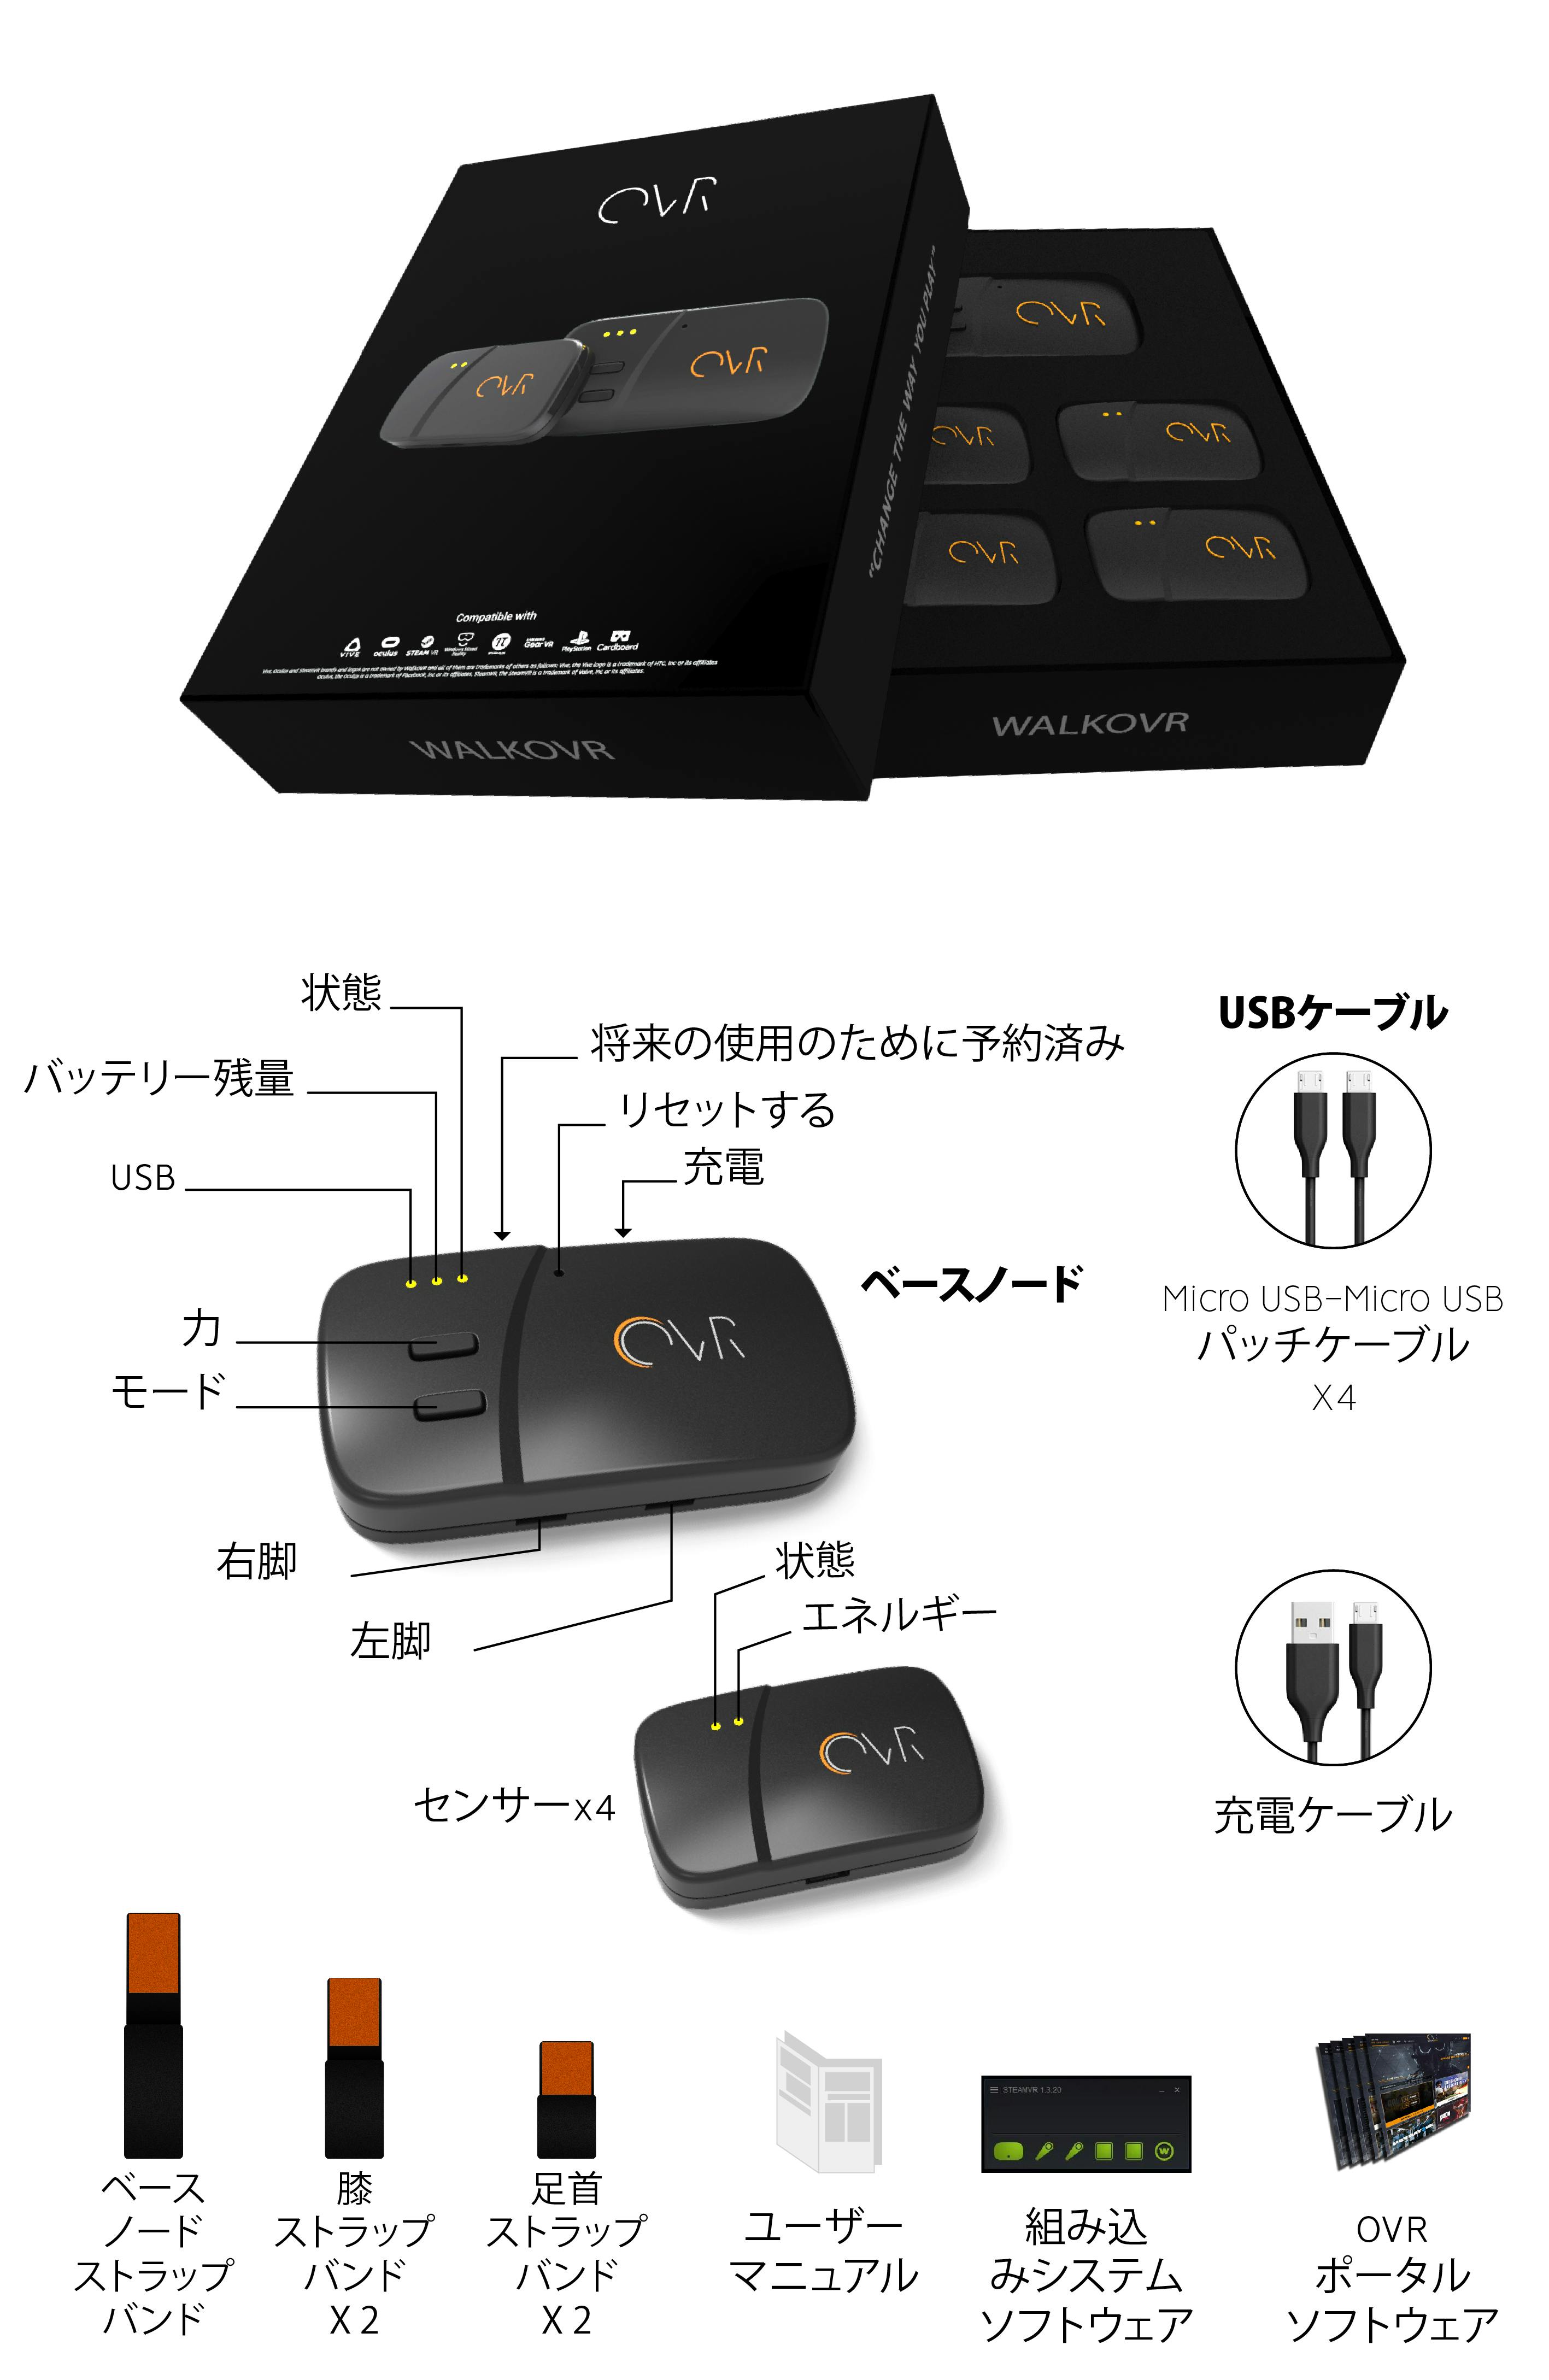 VR】walk OVR【歩行デバイス】Vive oculus valve - PC/タブレット